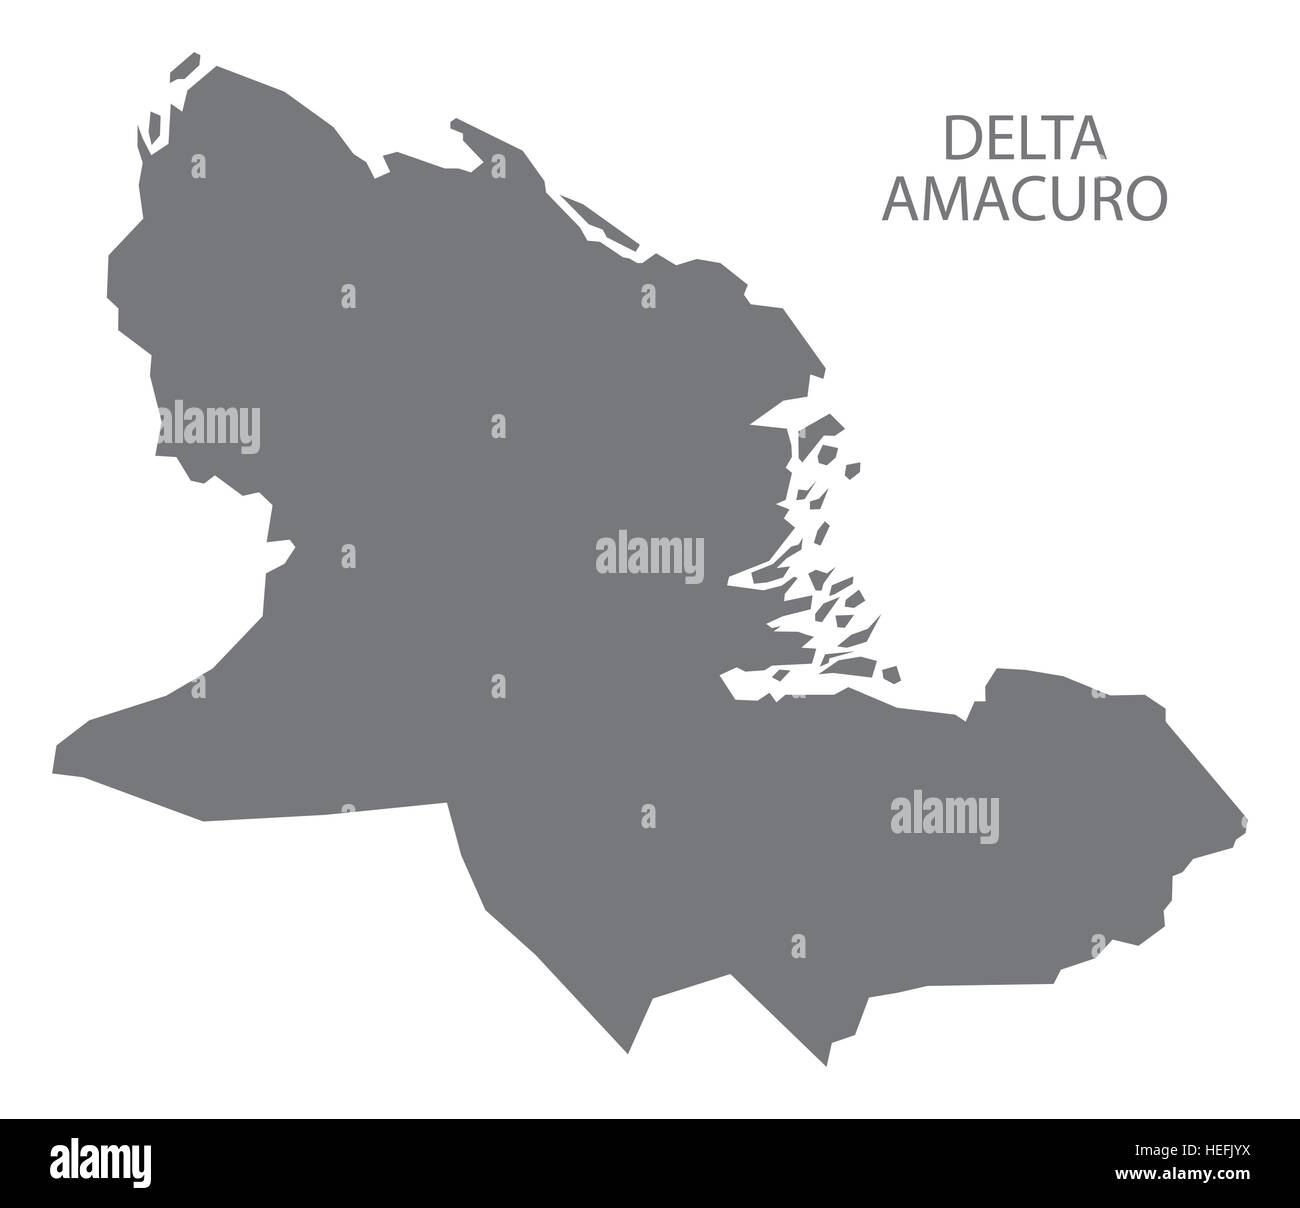 Delta Amacuro Venezuela Map in grey Stock Vector